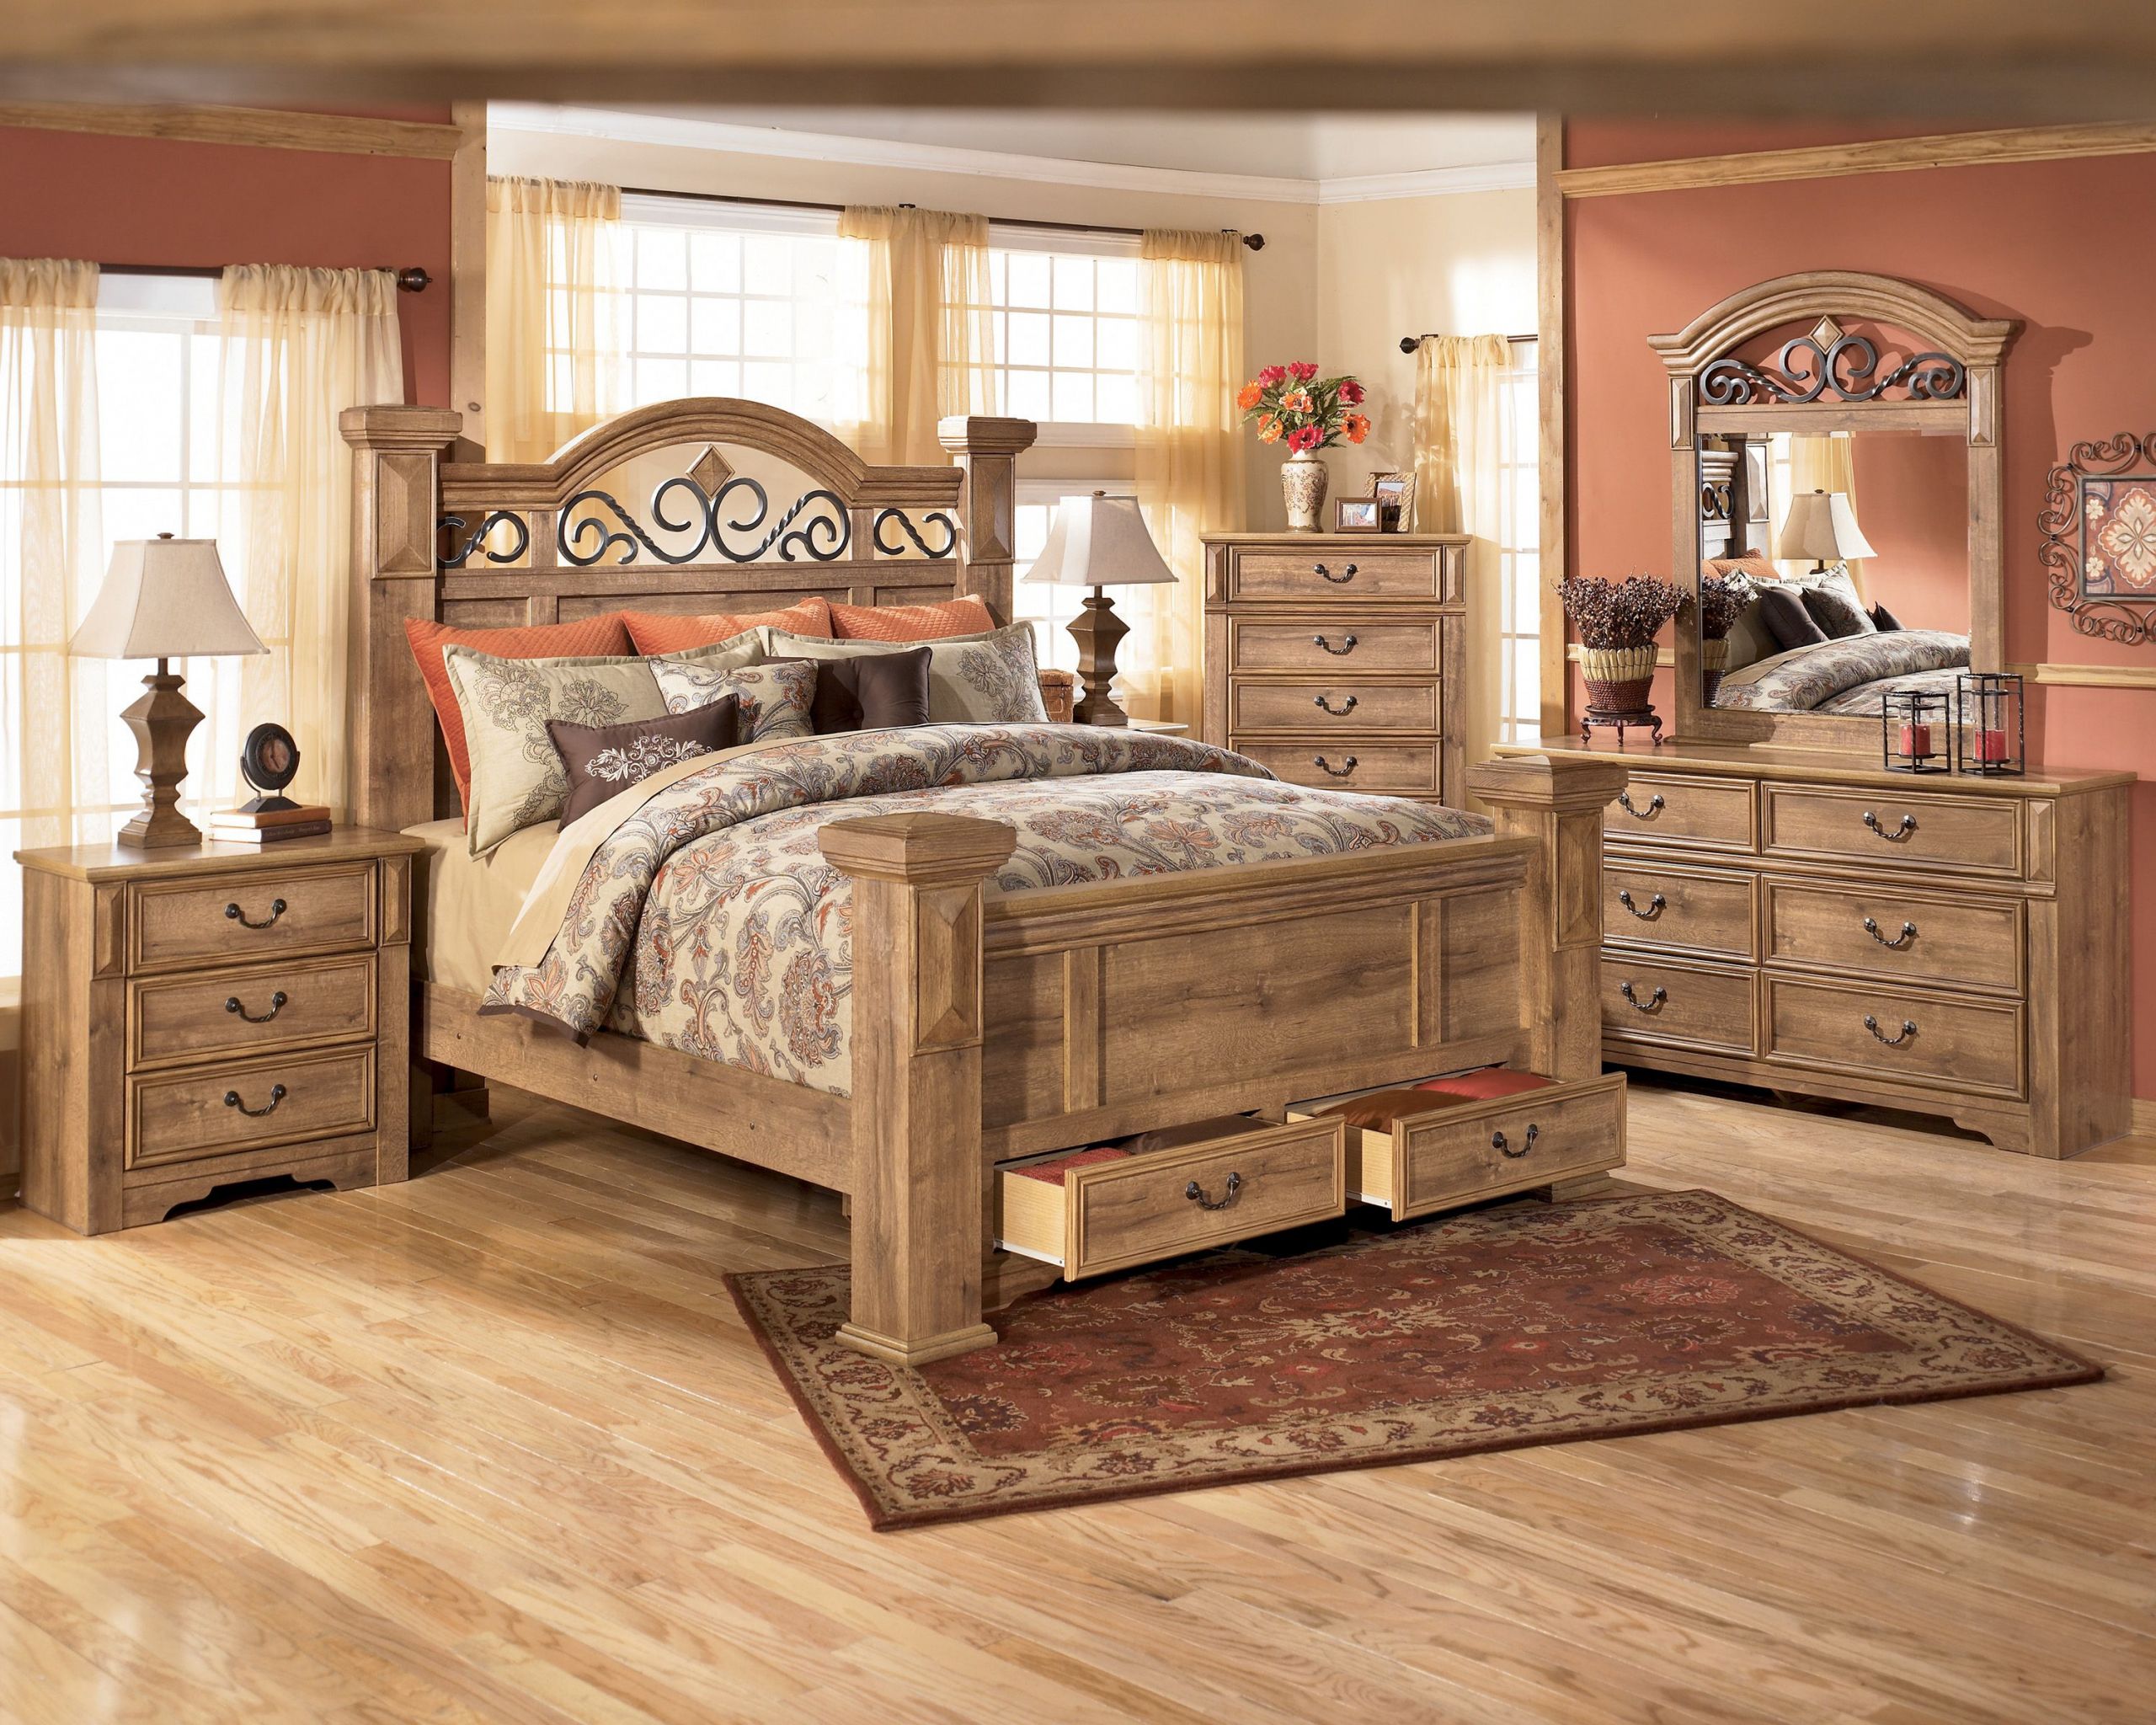 Rustic King Size Bedroom Sets
 